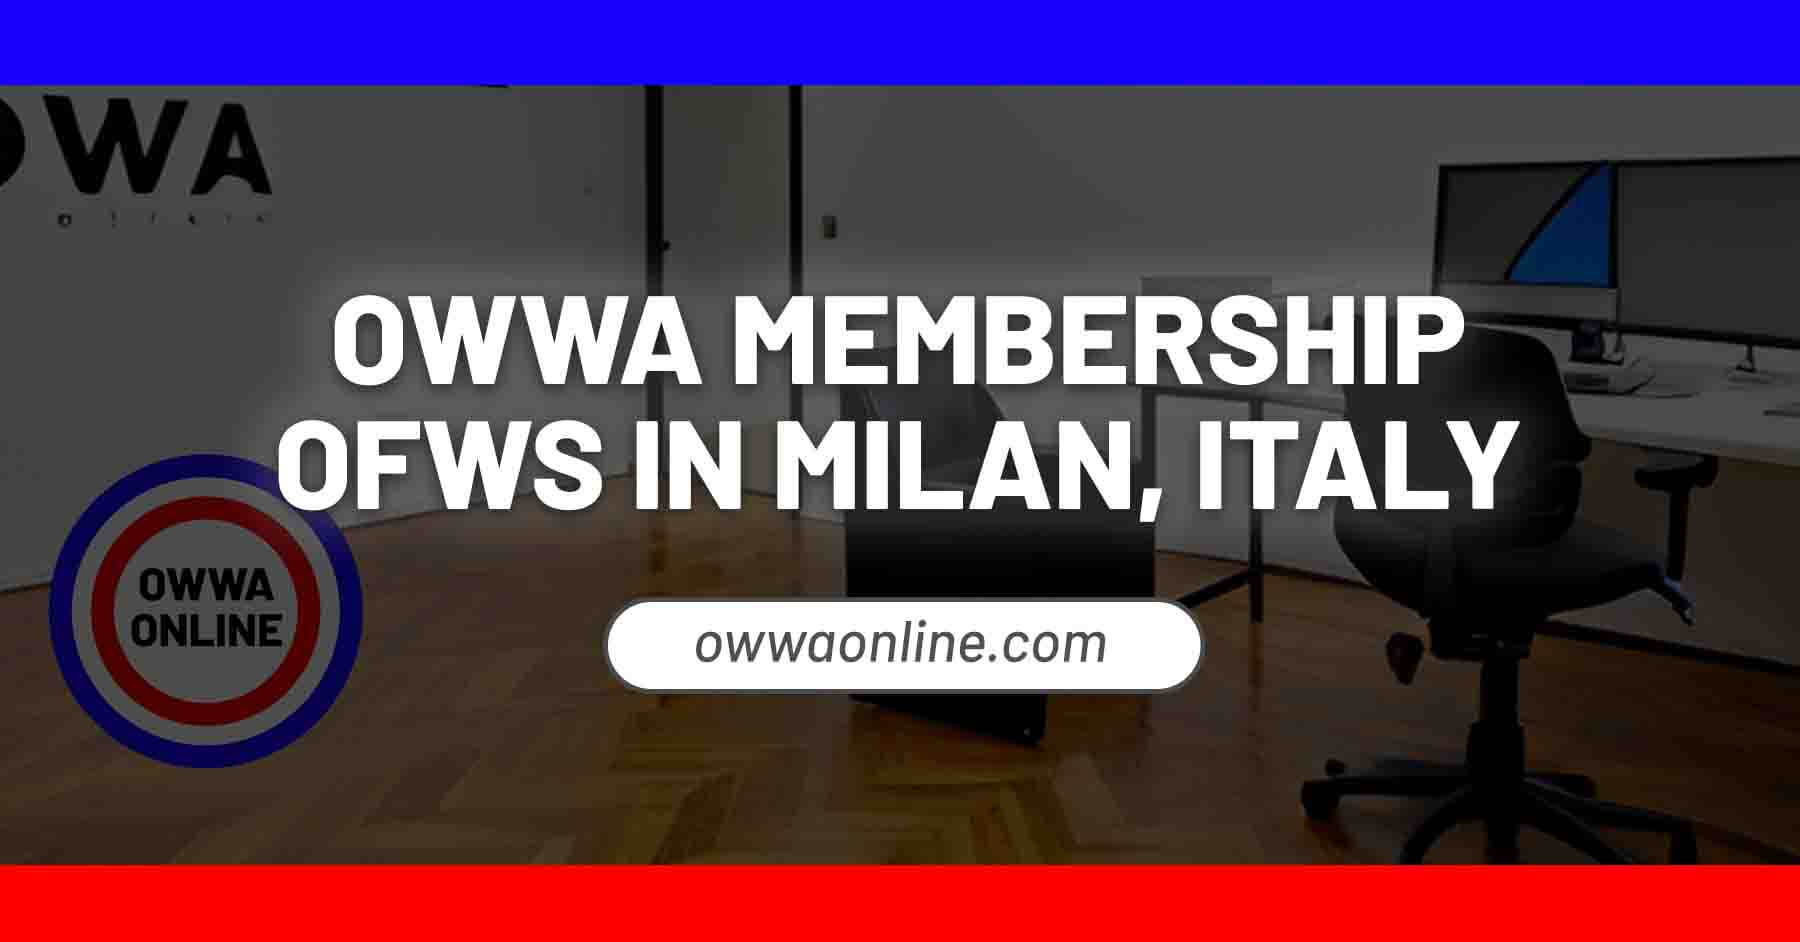 application for owwa membership renewal in milan italy